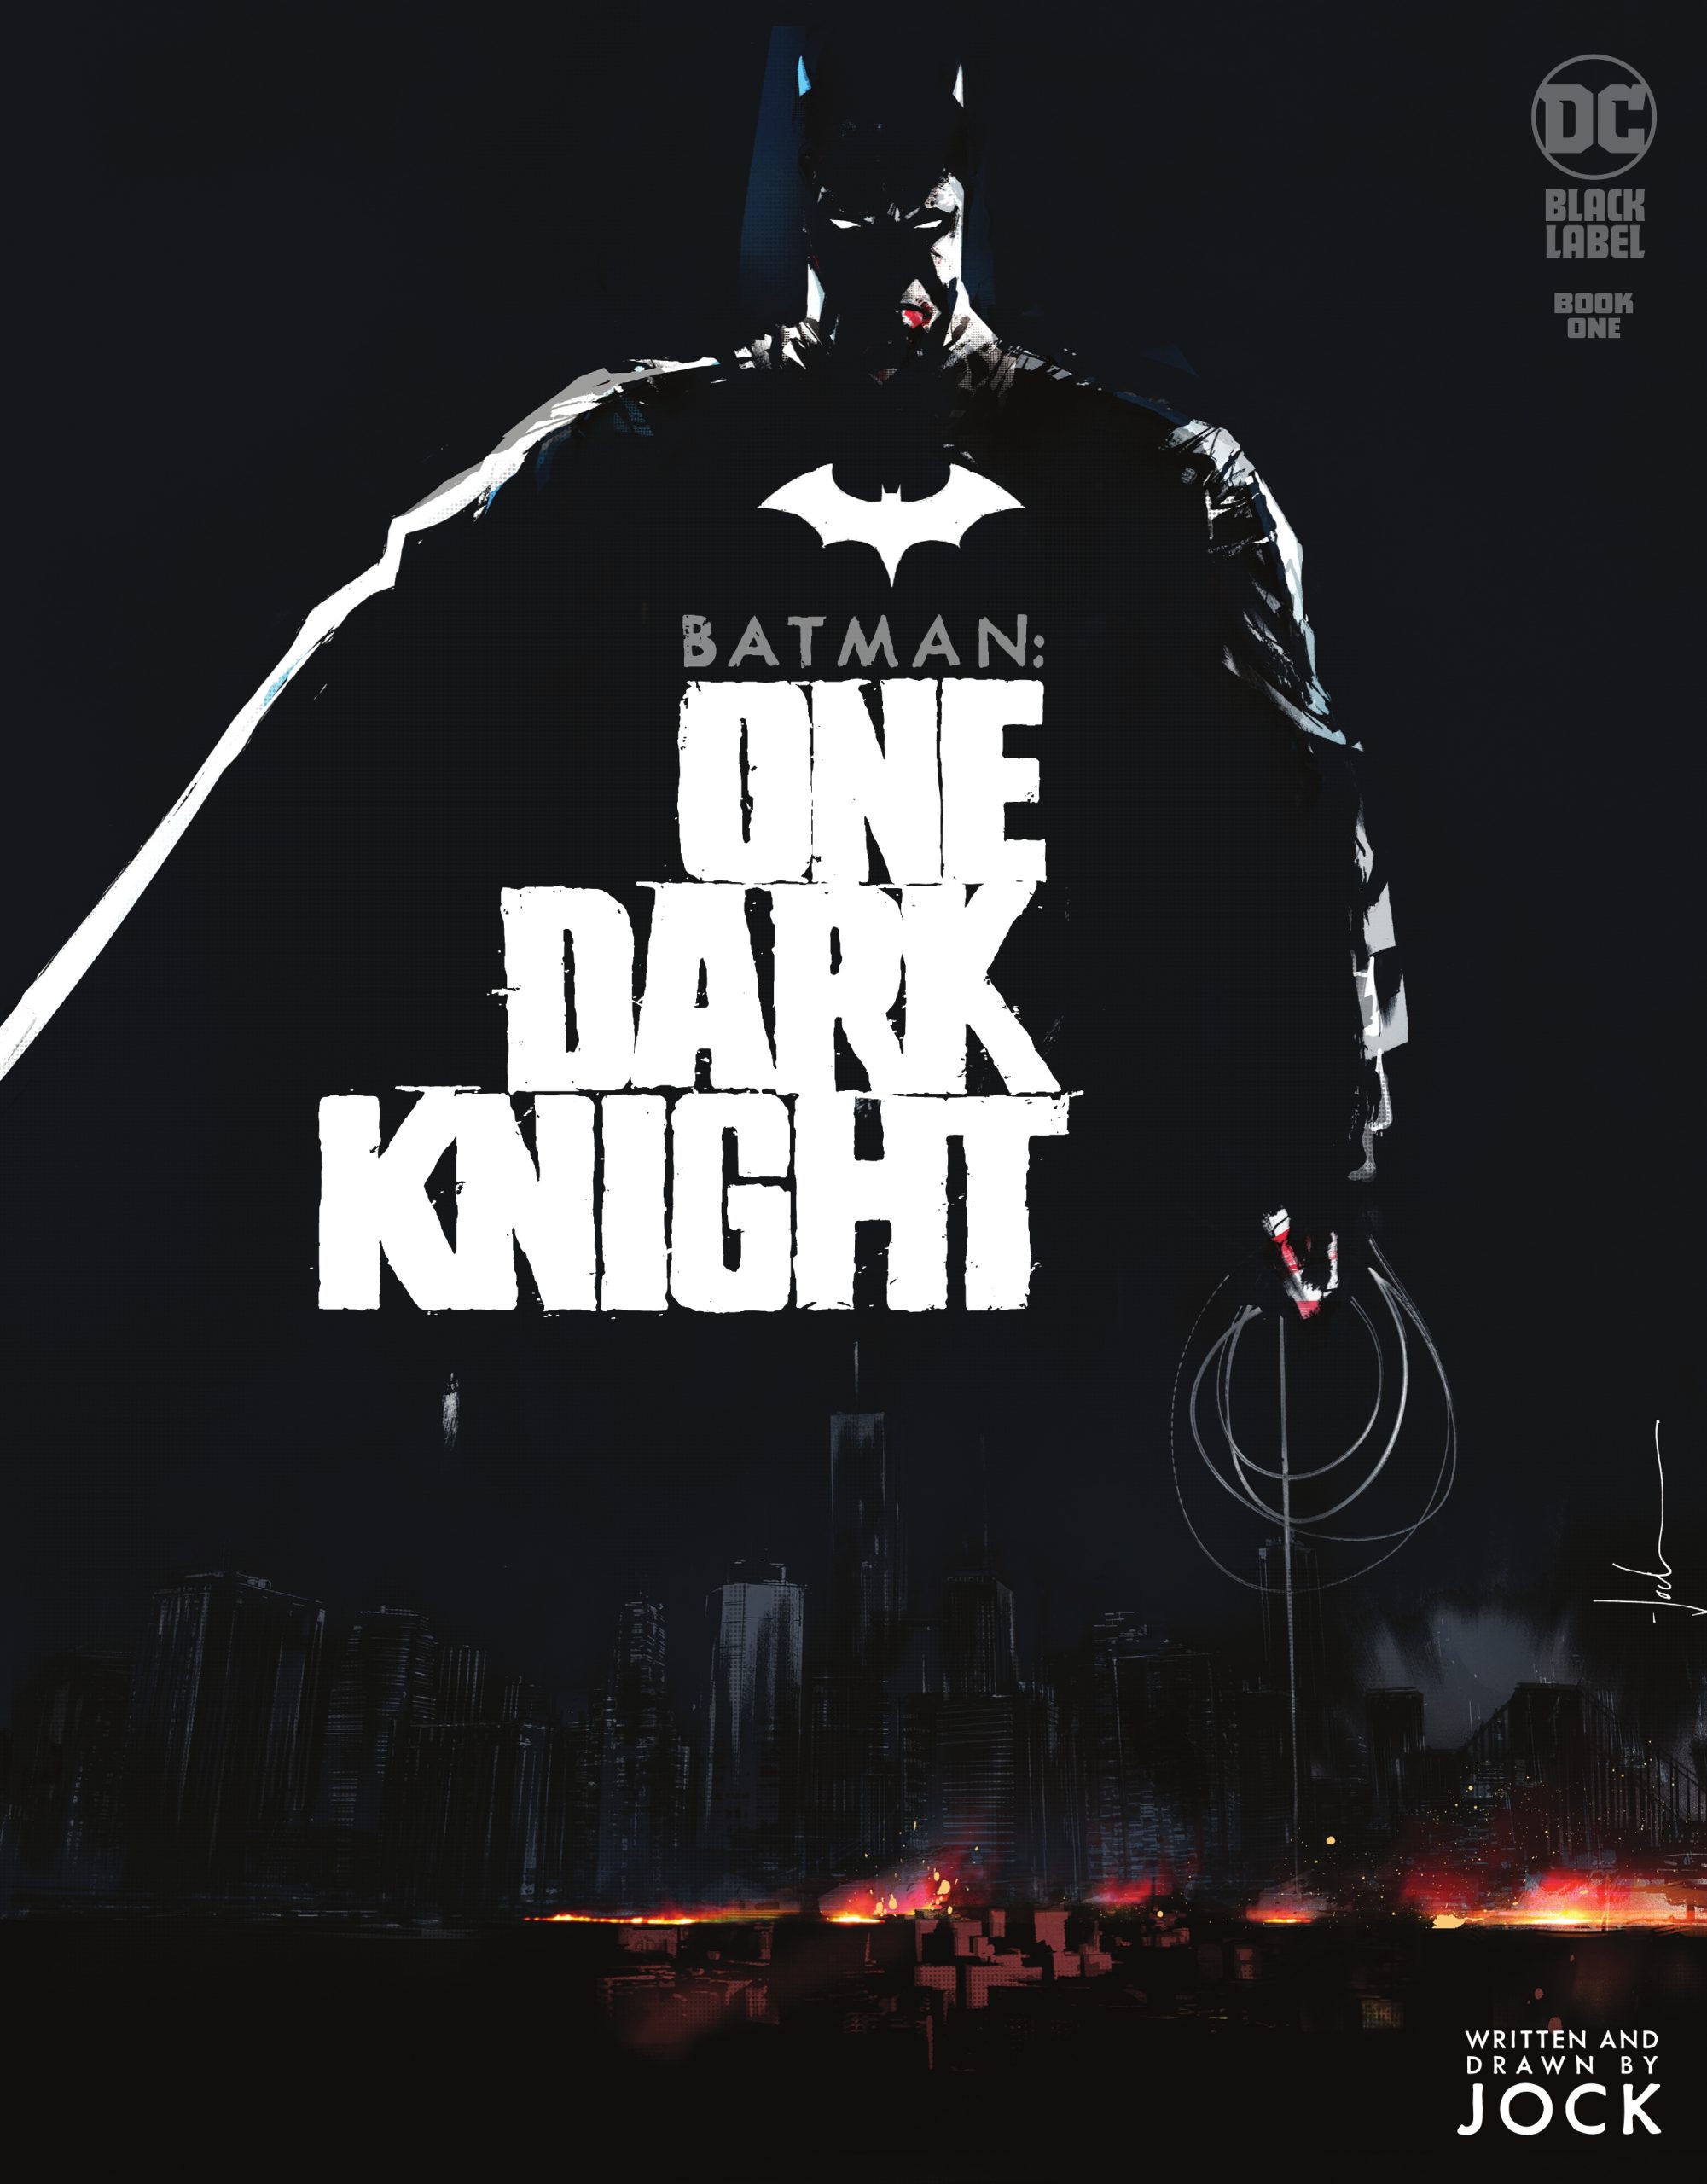 https://langgeek.net/wp-content/webpc-passthru.php?src=https://langgeek.net/wp-content/uploads/2021/12/Batman-One-Dark-Knight-2021-001-000-2-scaled.jpg&nocache=1